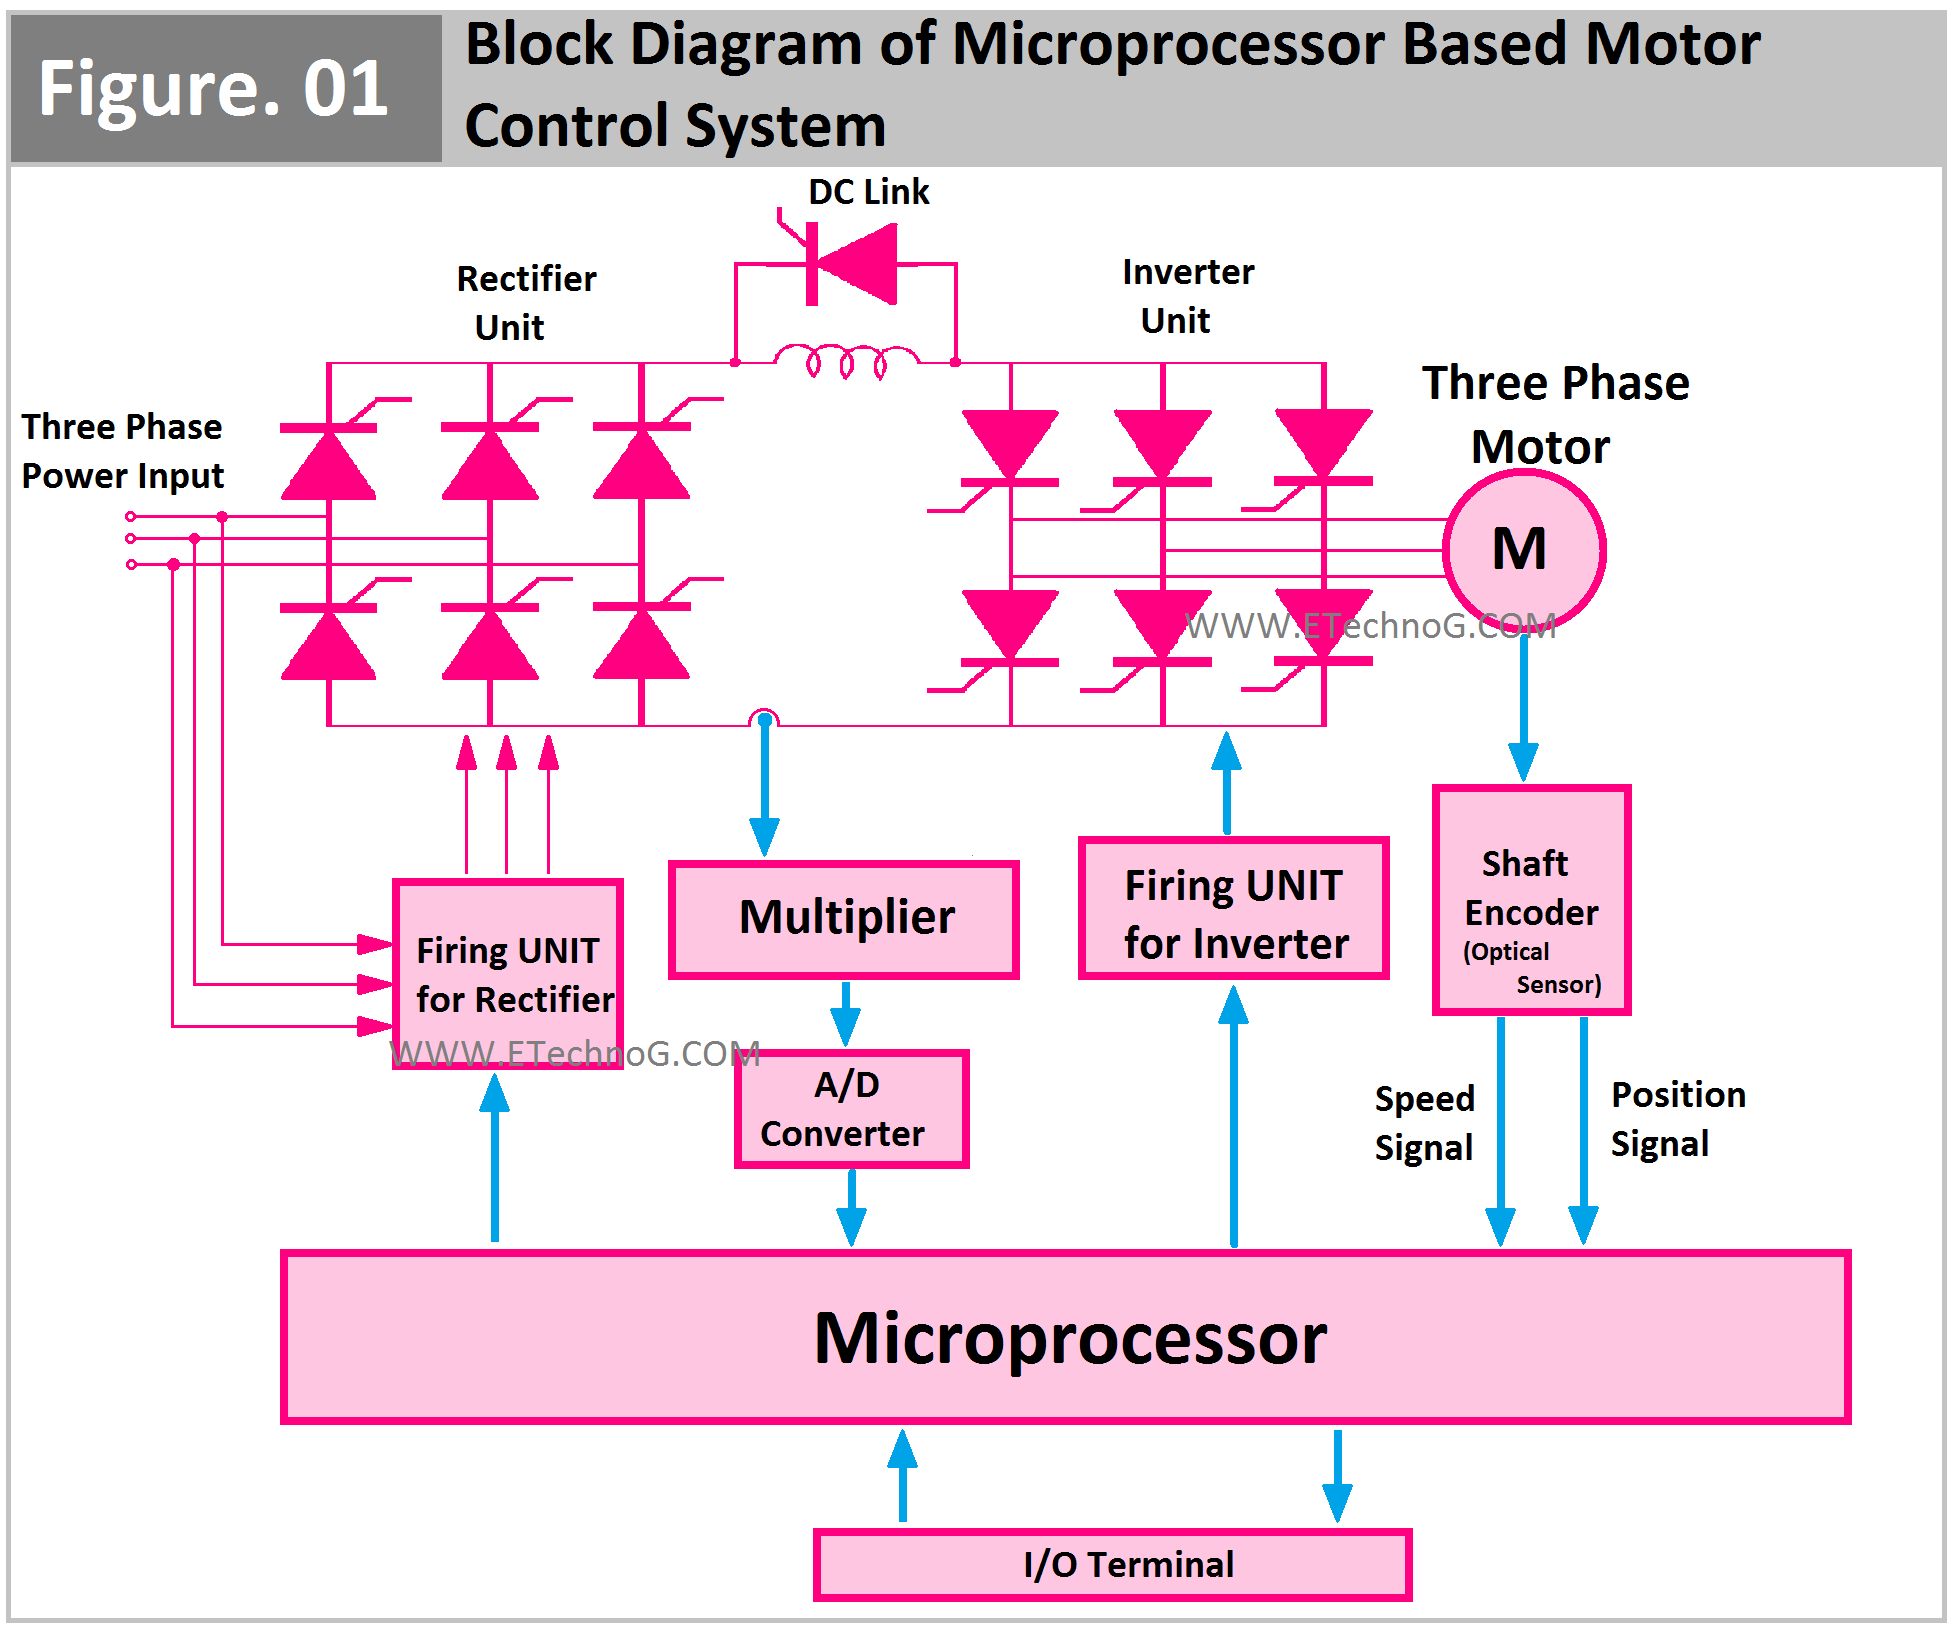 Block Diagram of Microprocessor Based Motor Control System